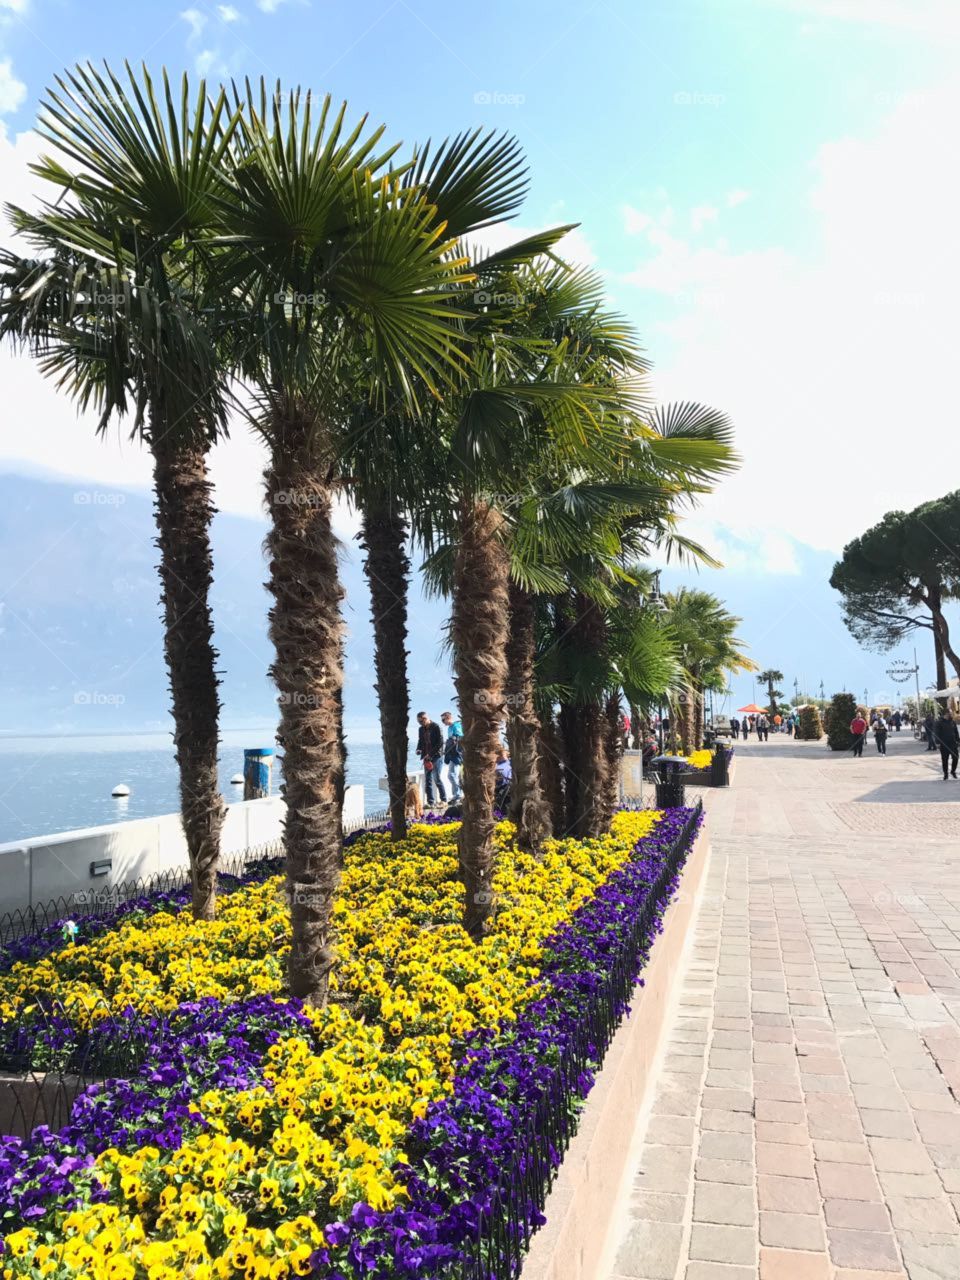 Palms and flowers on pedestrian way Limone sul Garda, Italy 